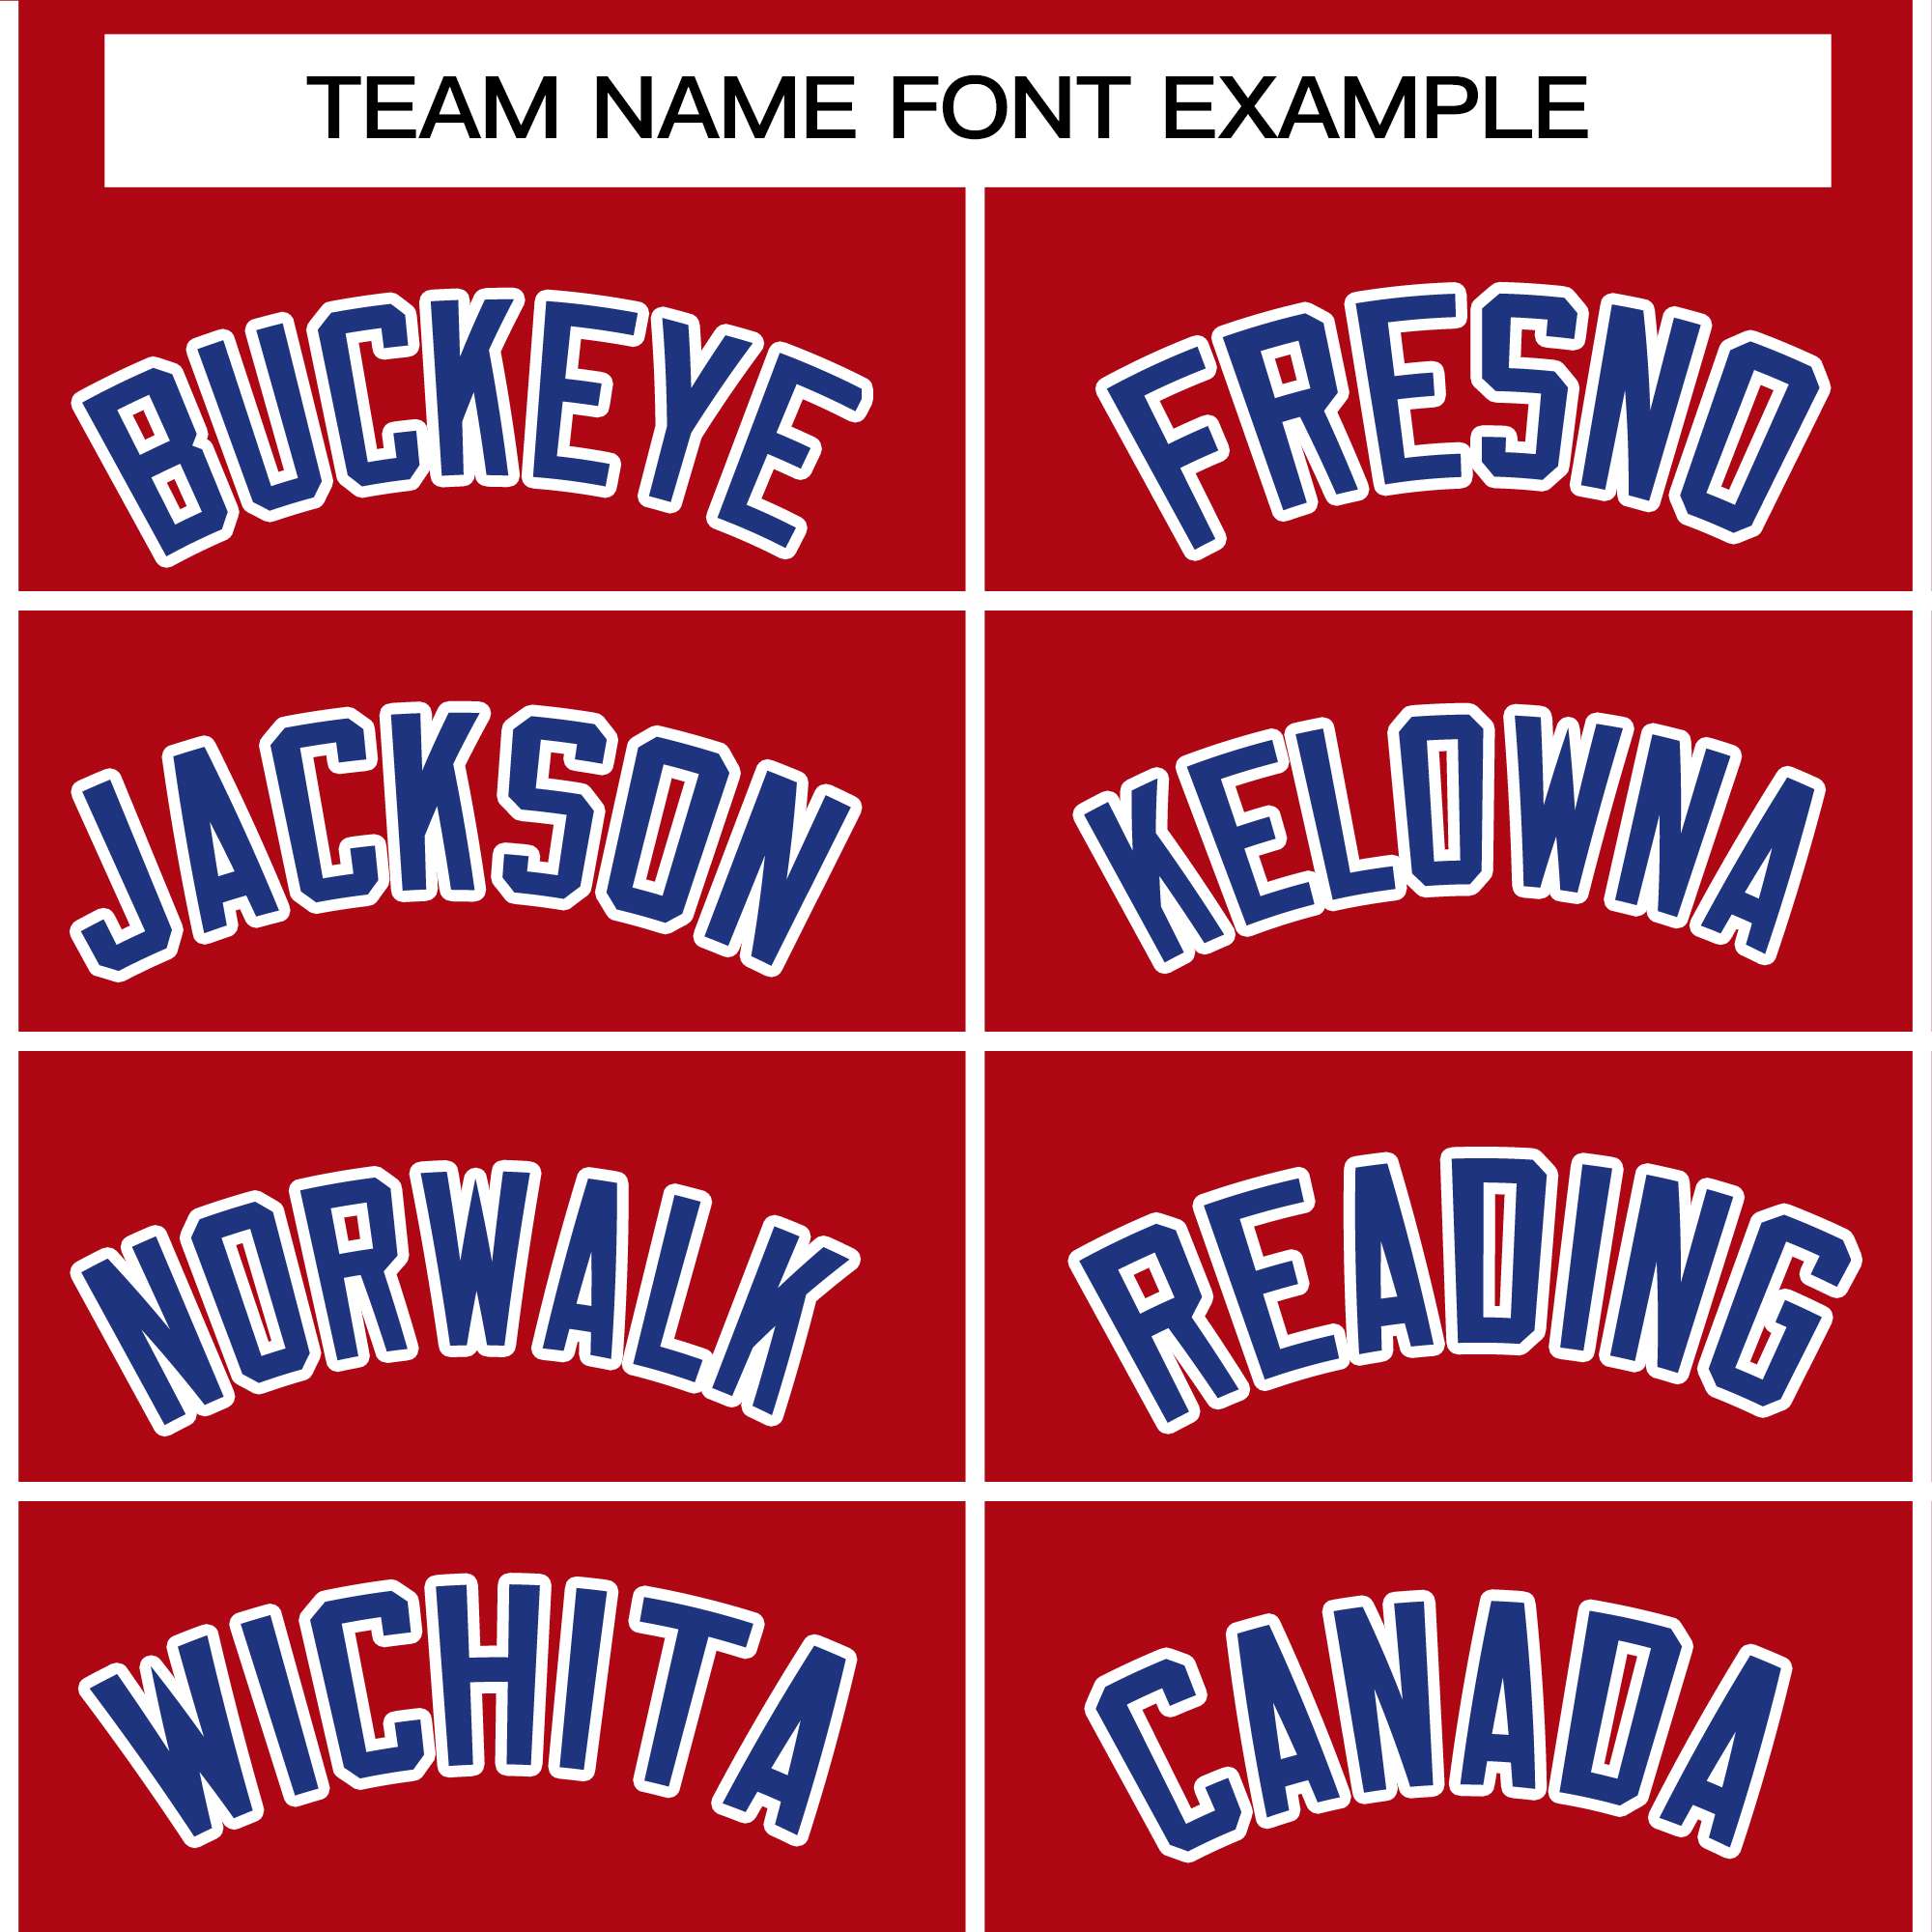 custom red hoodies team name font example for men